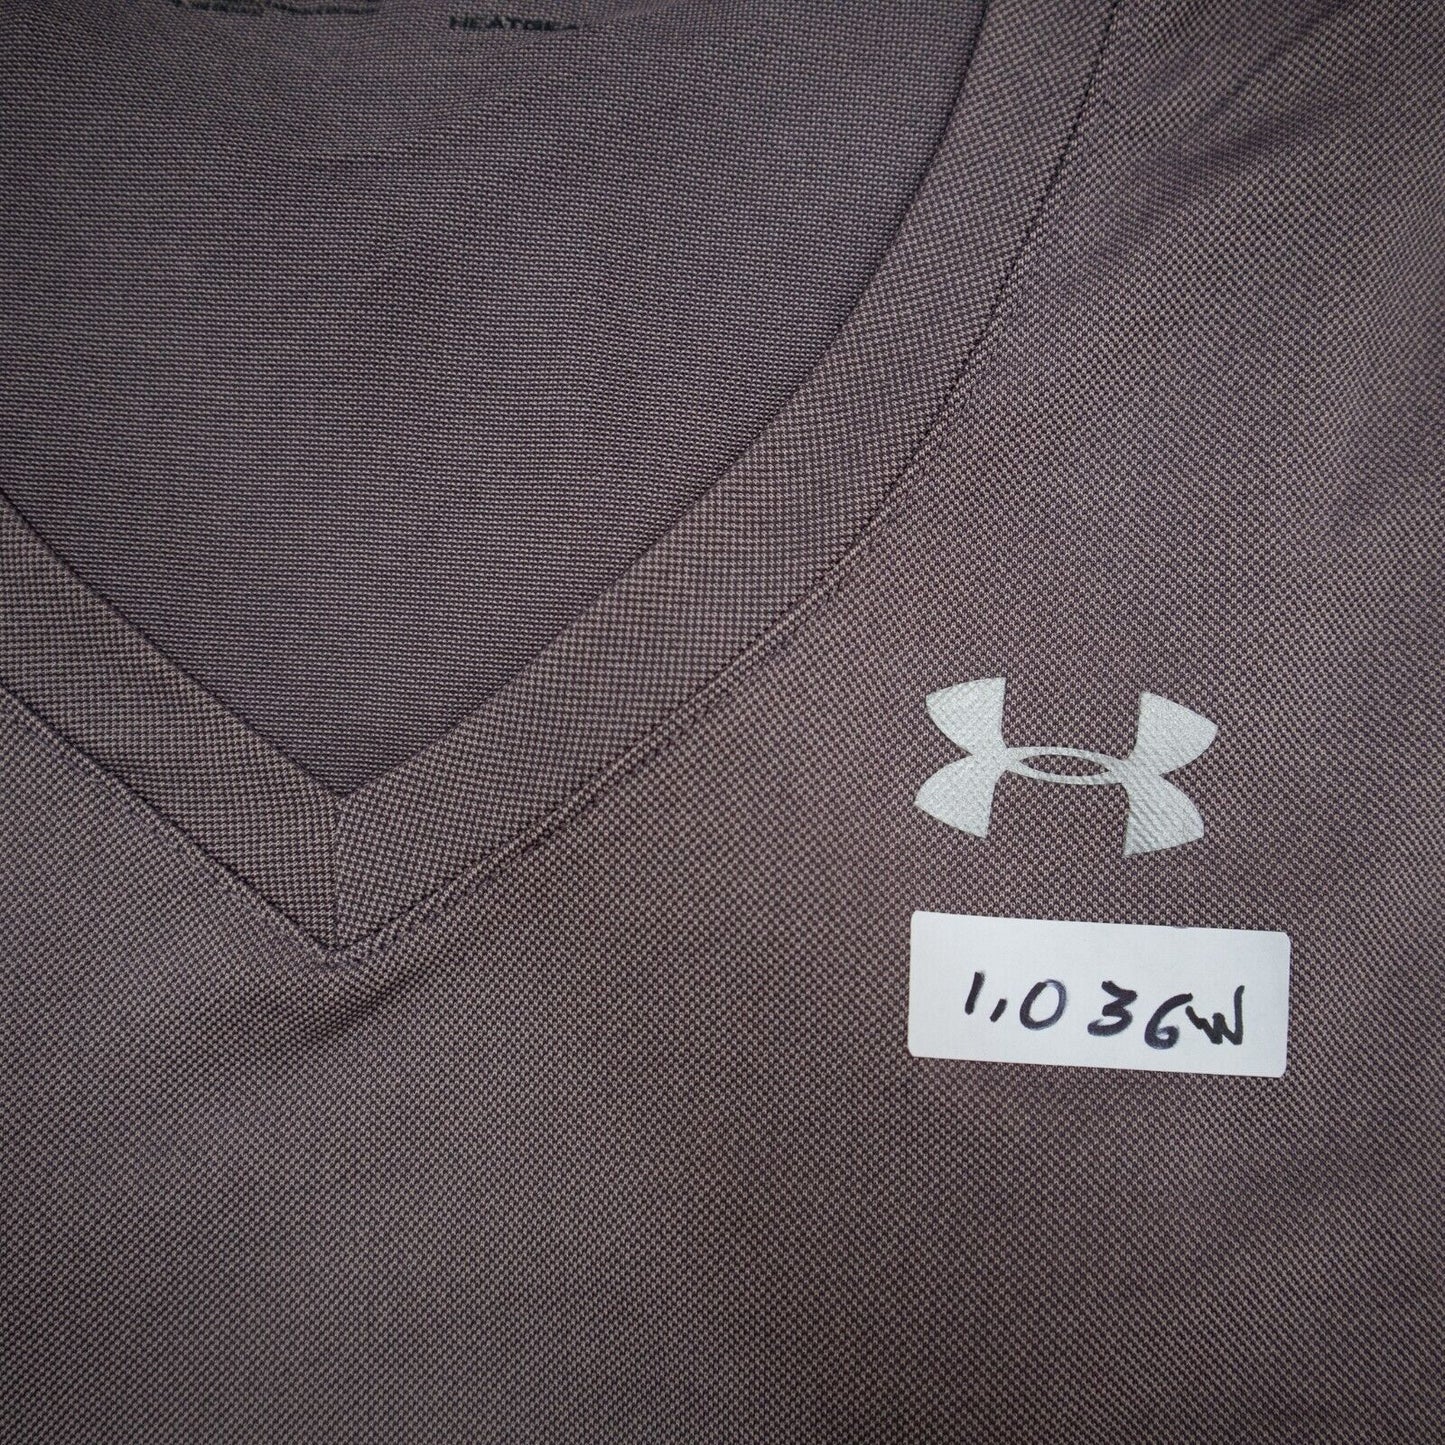 Under Armour Women's Heat Gear Sports V-Neck T-Shirt Short Sleeve Brown Size S